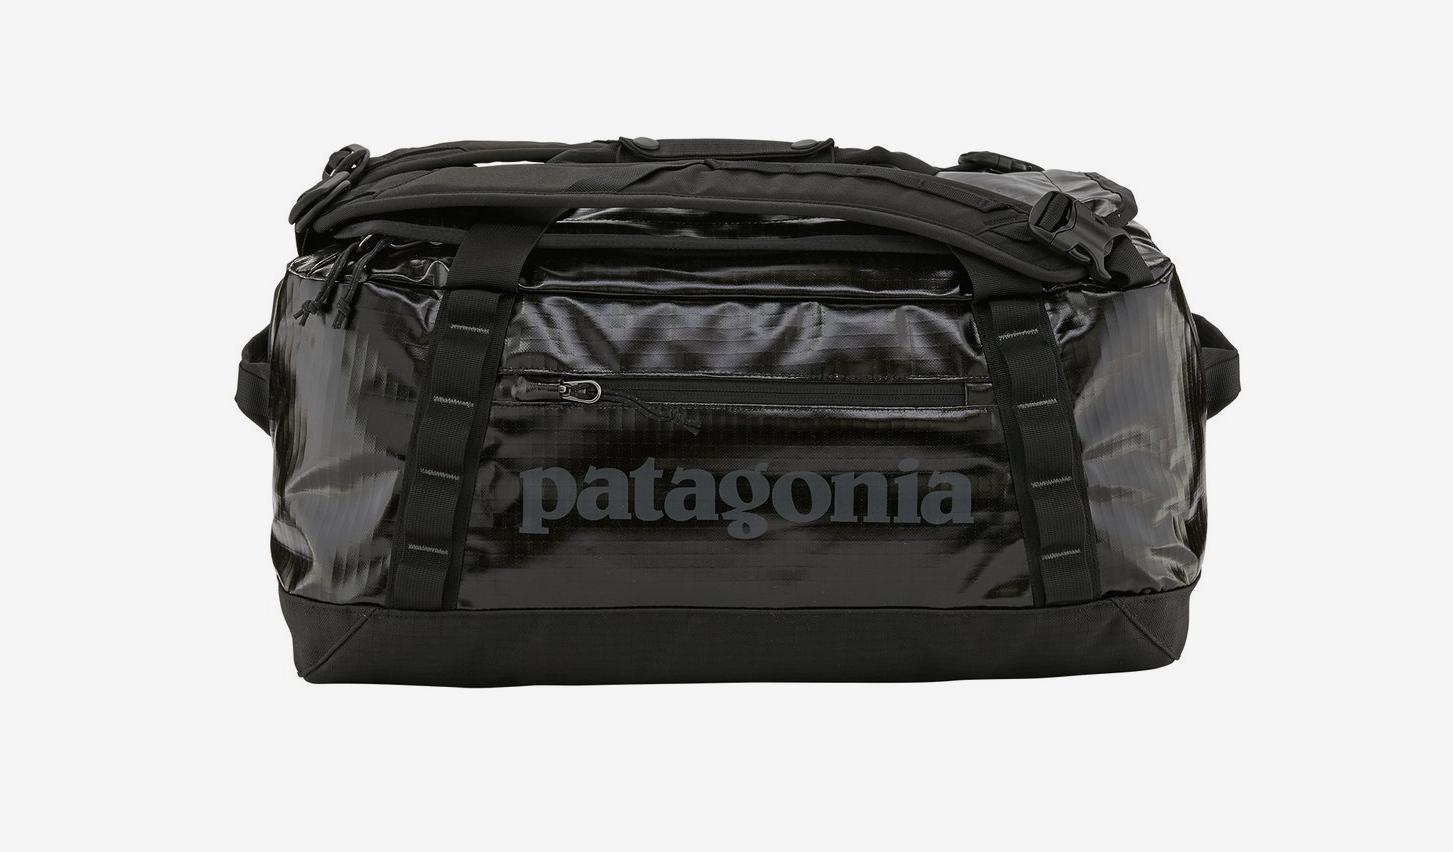 Patagonia Black Hole 40-liter duffel bag.